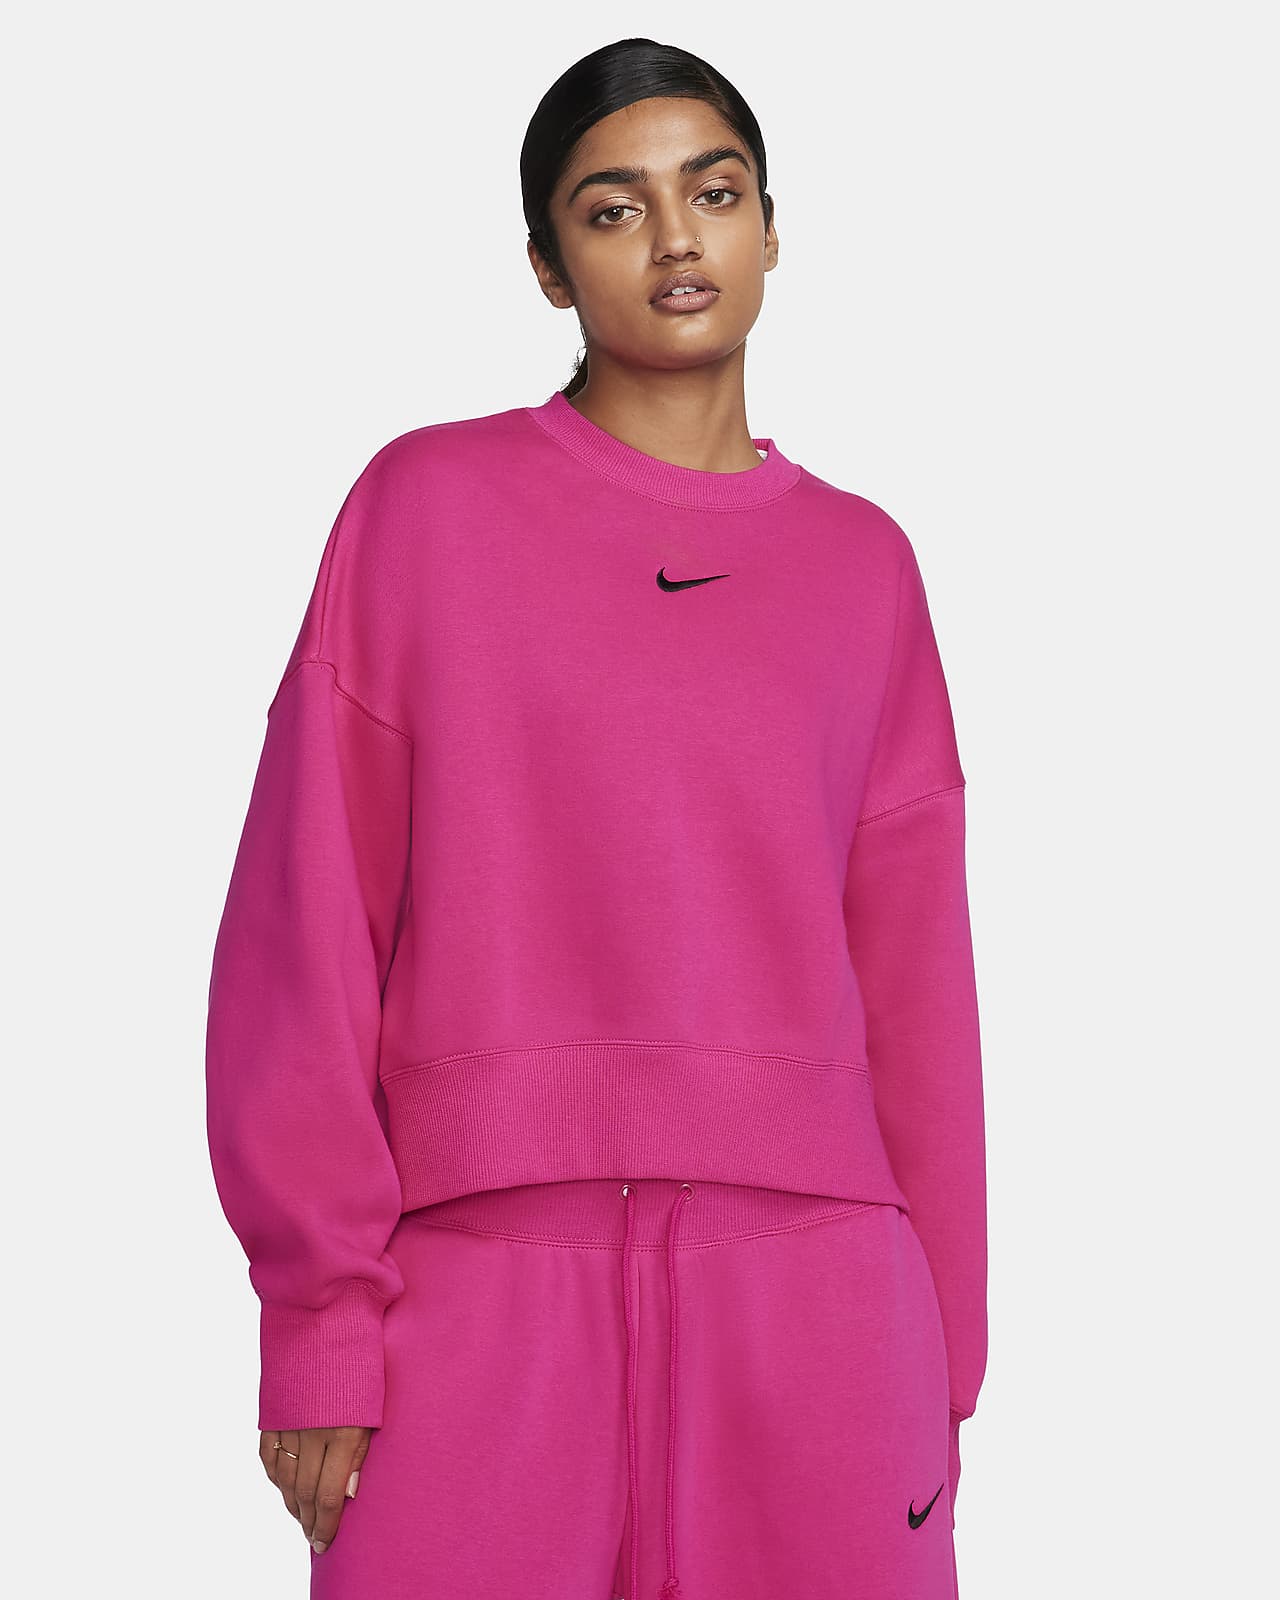 Sweatshirt de gola redonda extremamente folgada Nike Sportswear Phoenix  Fleece para mulher